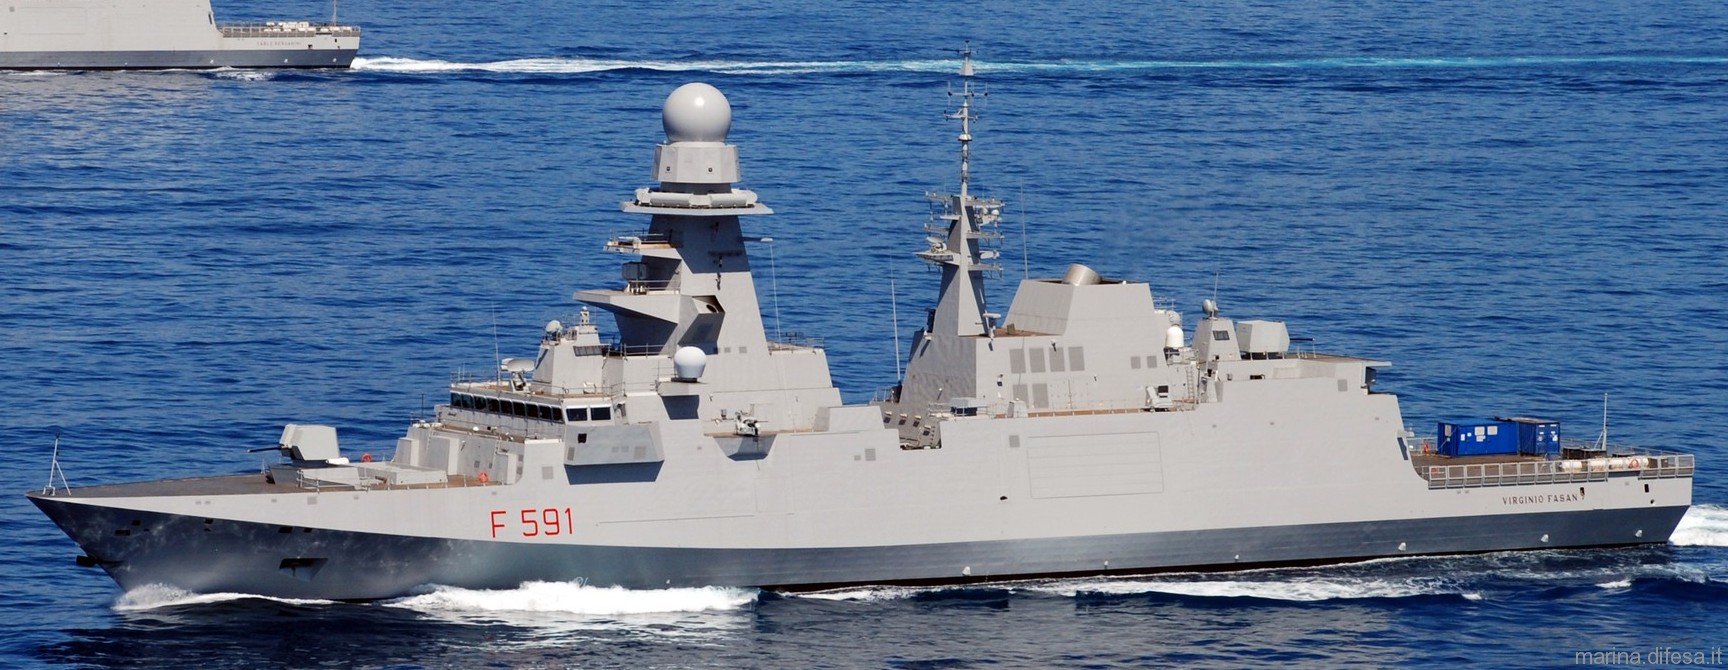 f-591 virginio fasan its nave bergamini fremm class guided missile frigate italian navy marina militare 07